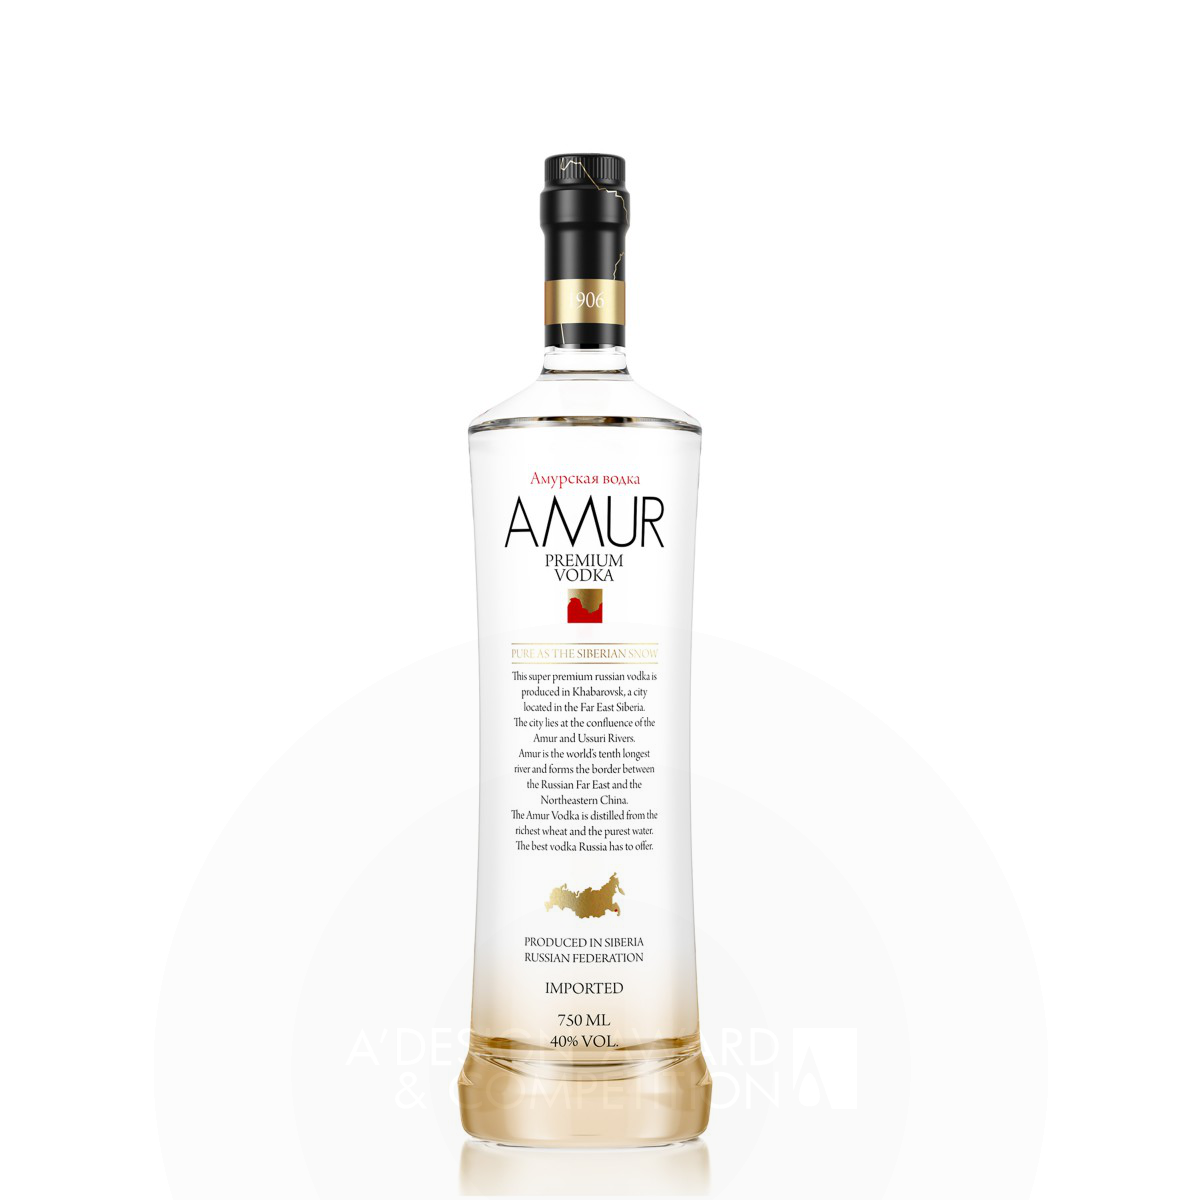 AMUR VODKA Vodka Bottle by Guilherme Jardim